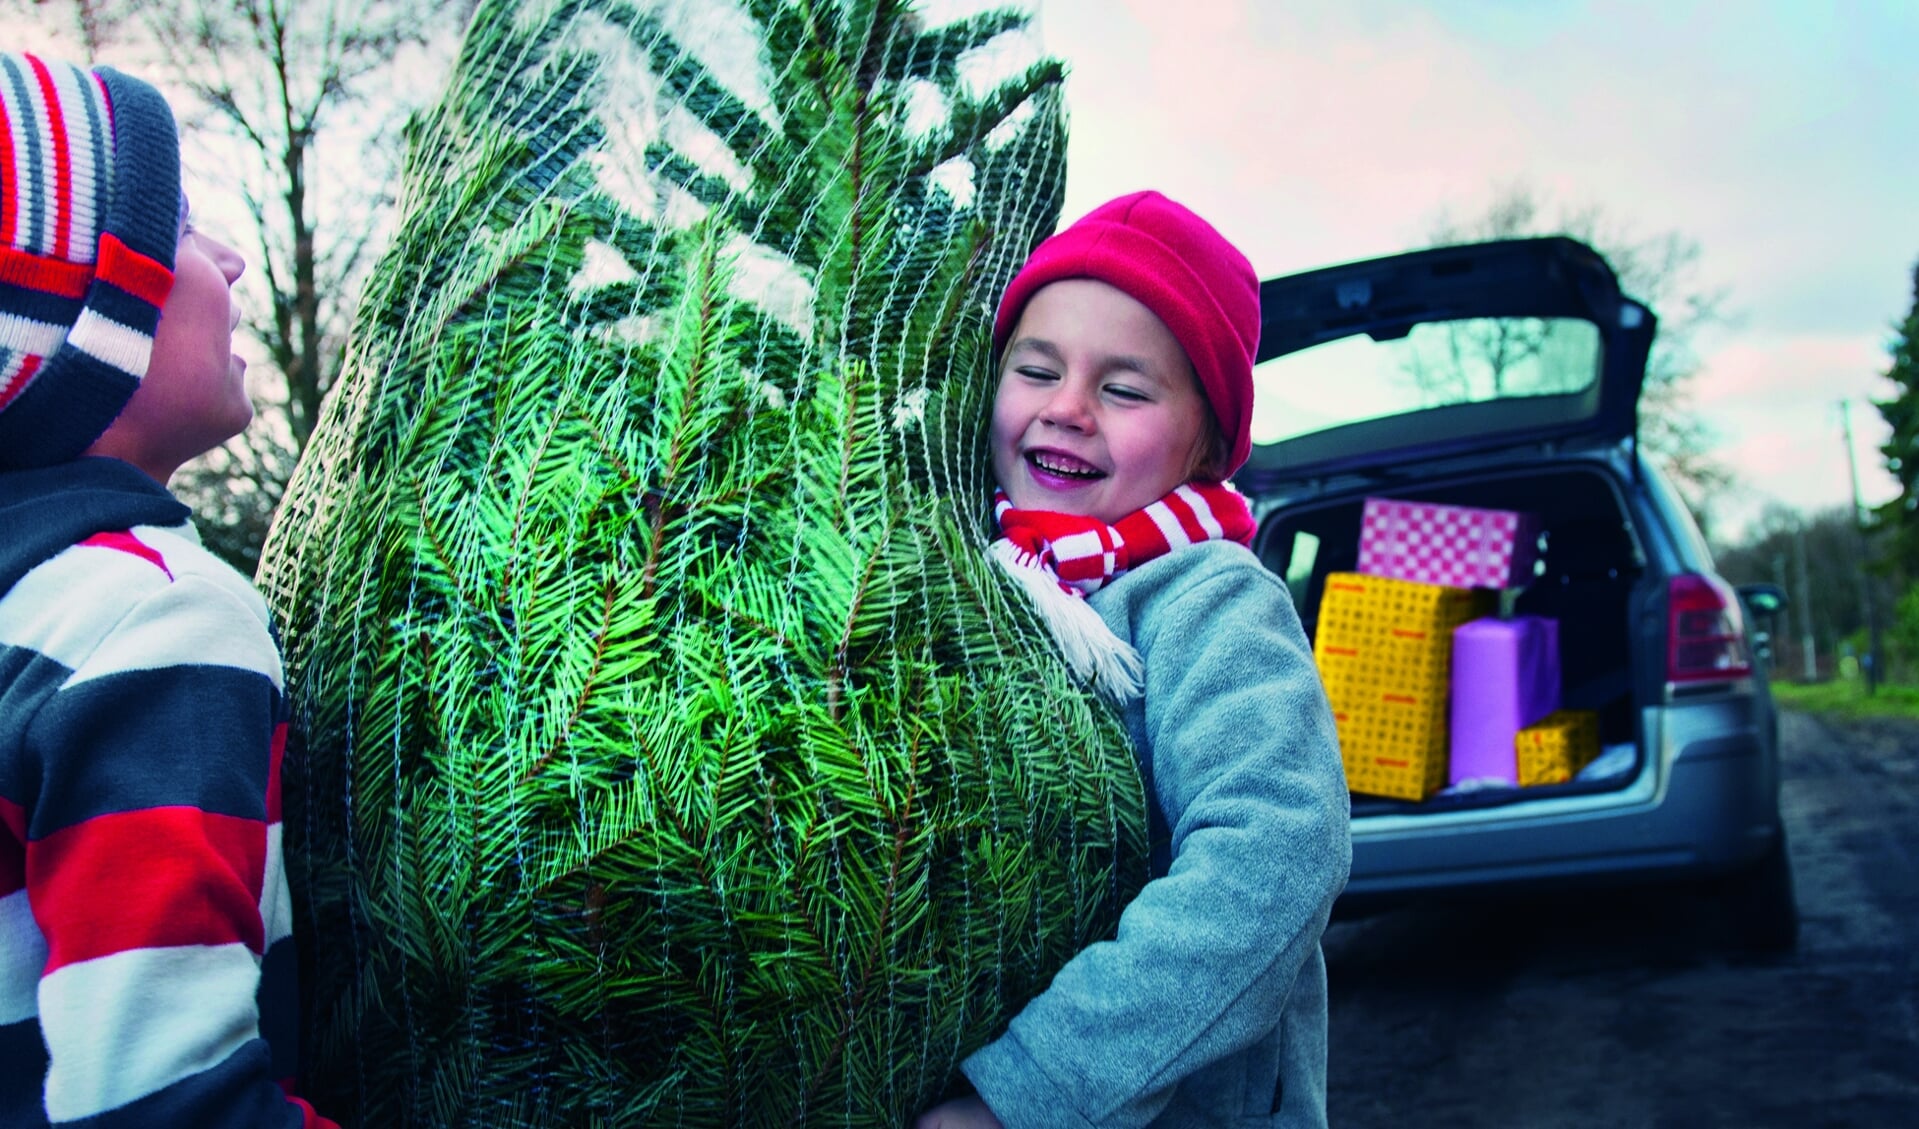 Two boys lifting Christmas tree to car